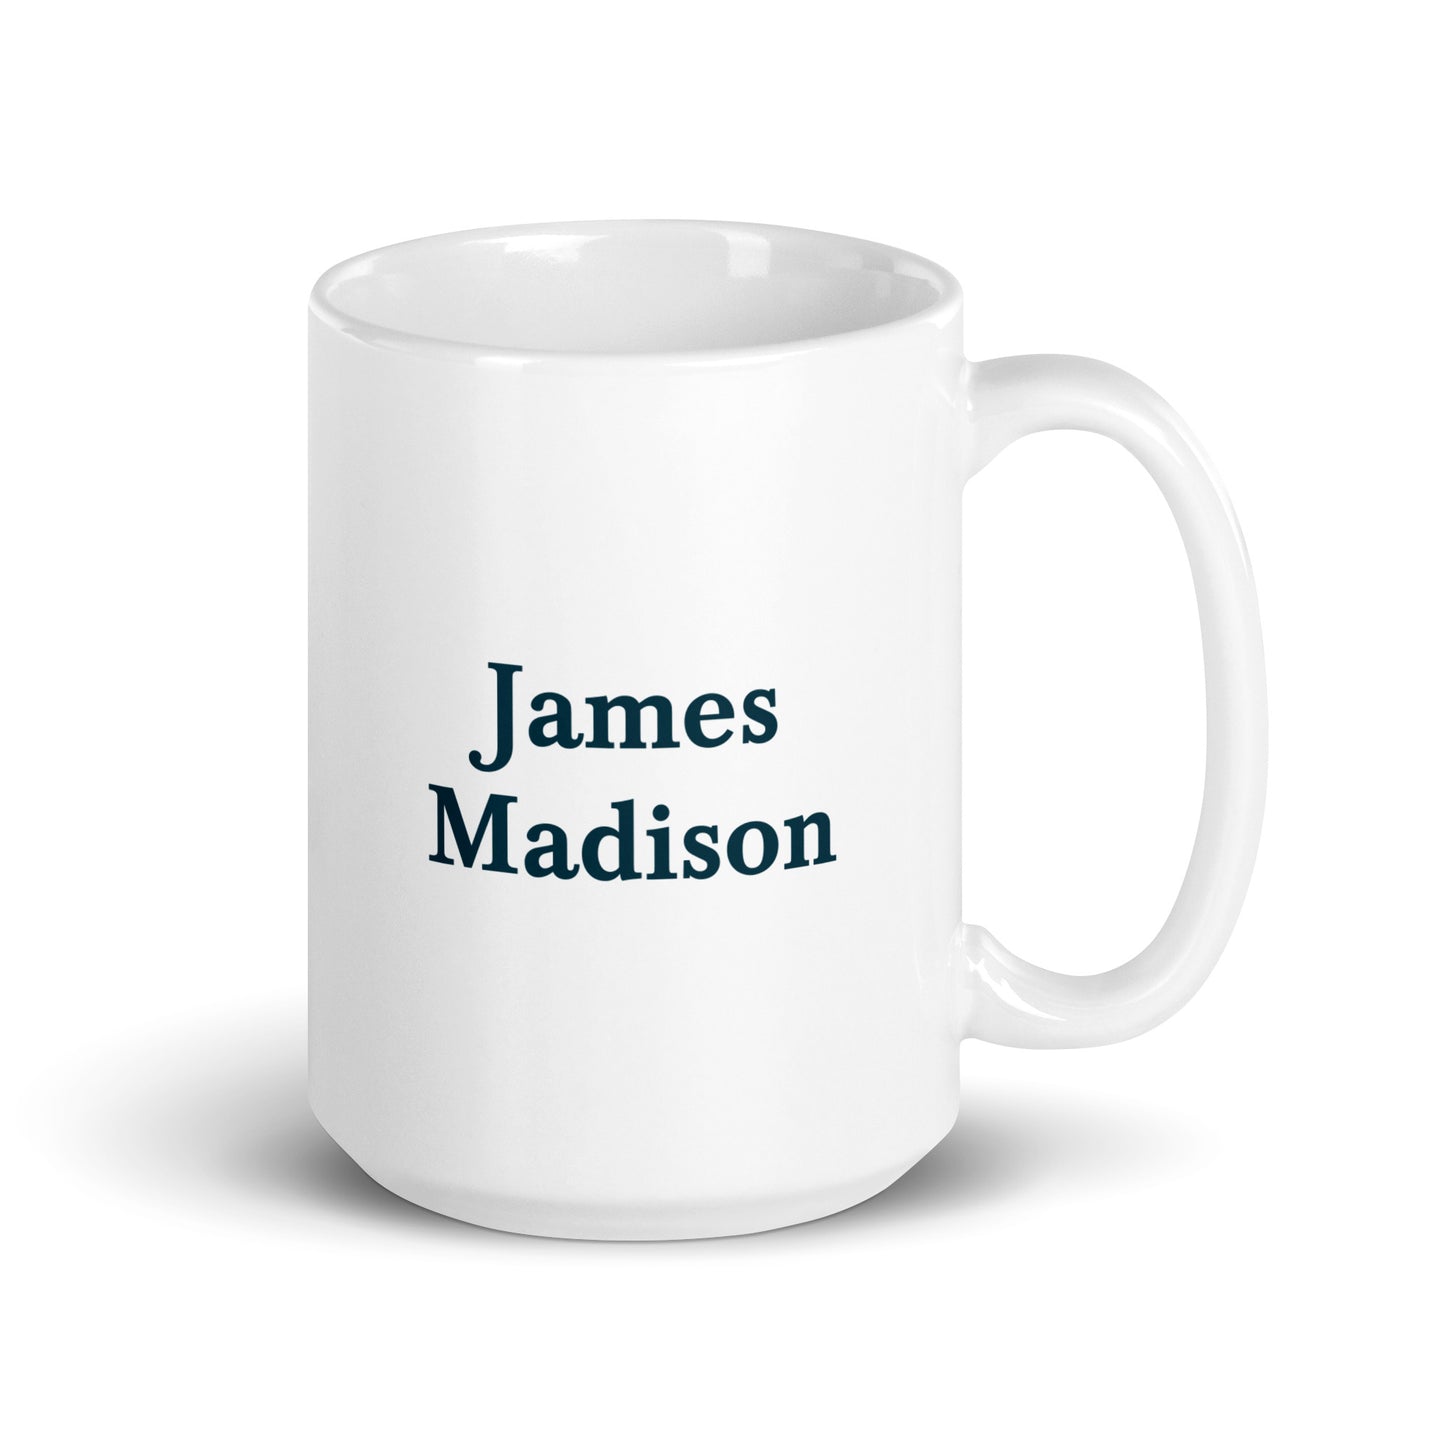 James Madison white glossy mug